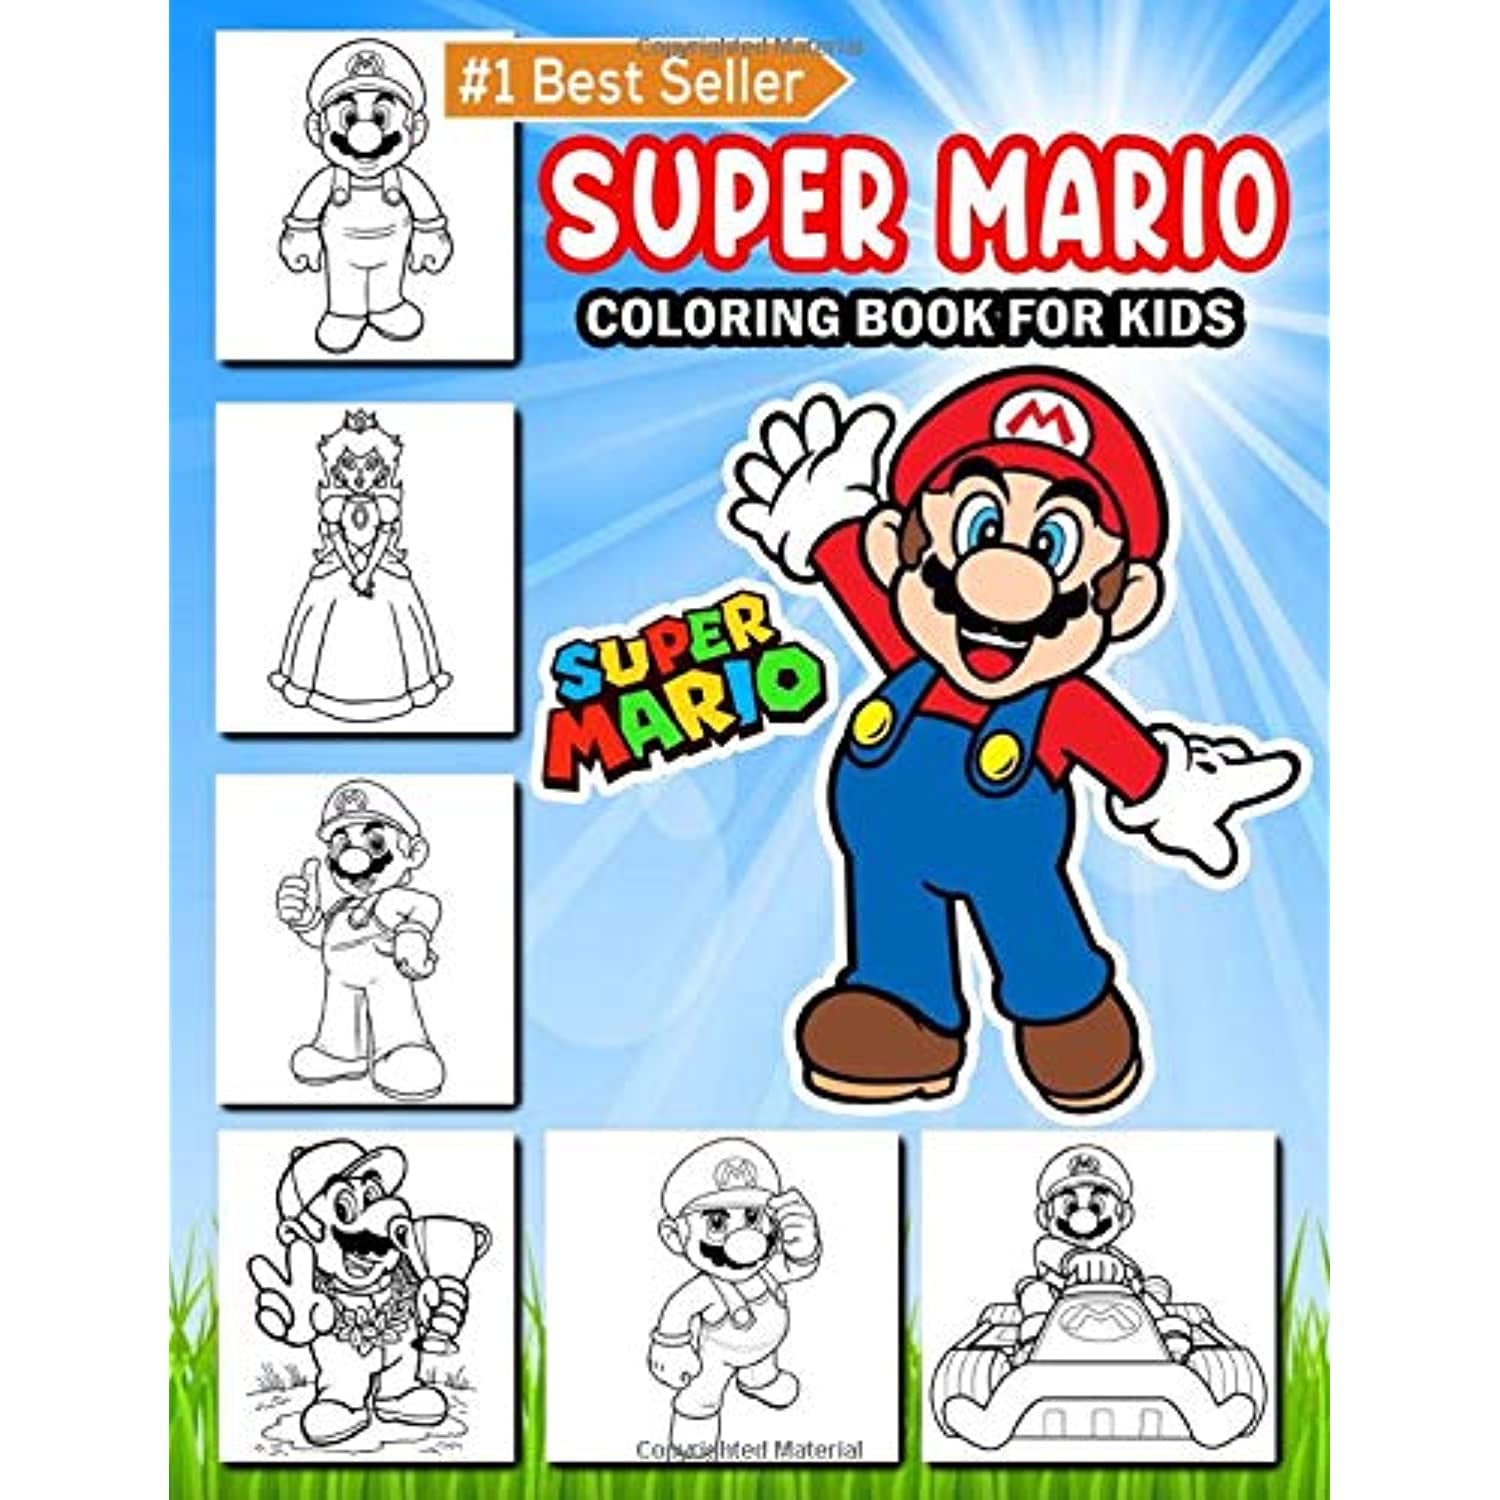 Super Mario Coloring Book For Kids   20 Super Mario, Princes, Luigi,  Donkey Kong, Yoshi Coloring Pages   Super Mario Coloring Book For Teens    Super ...